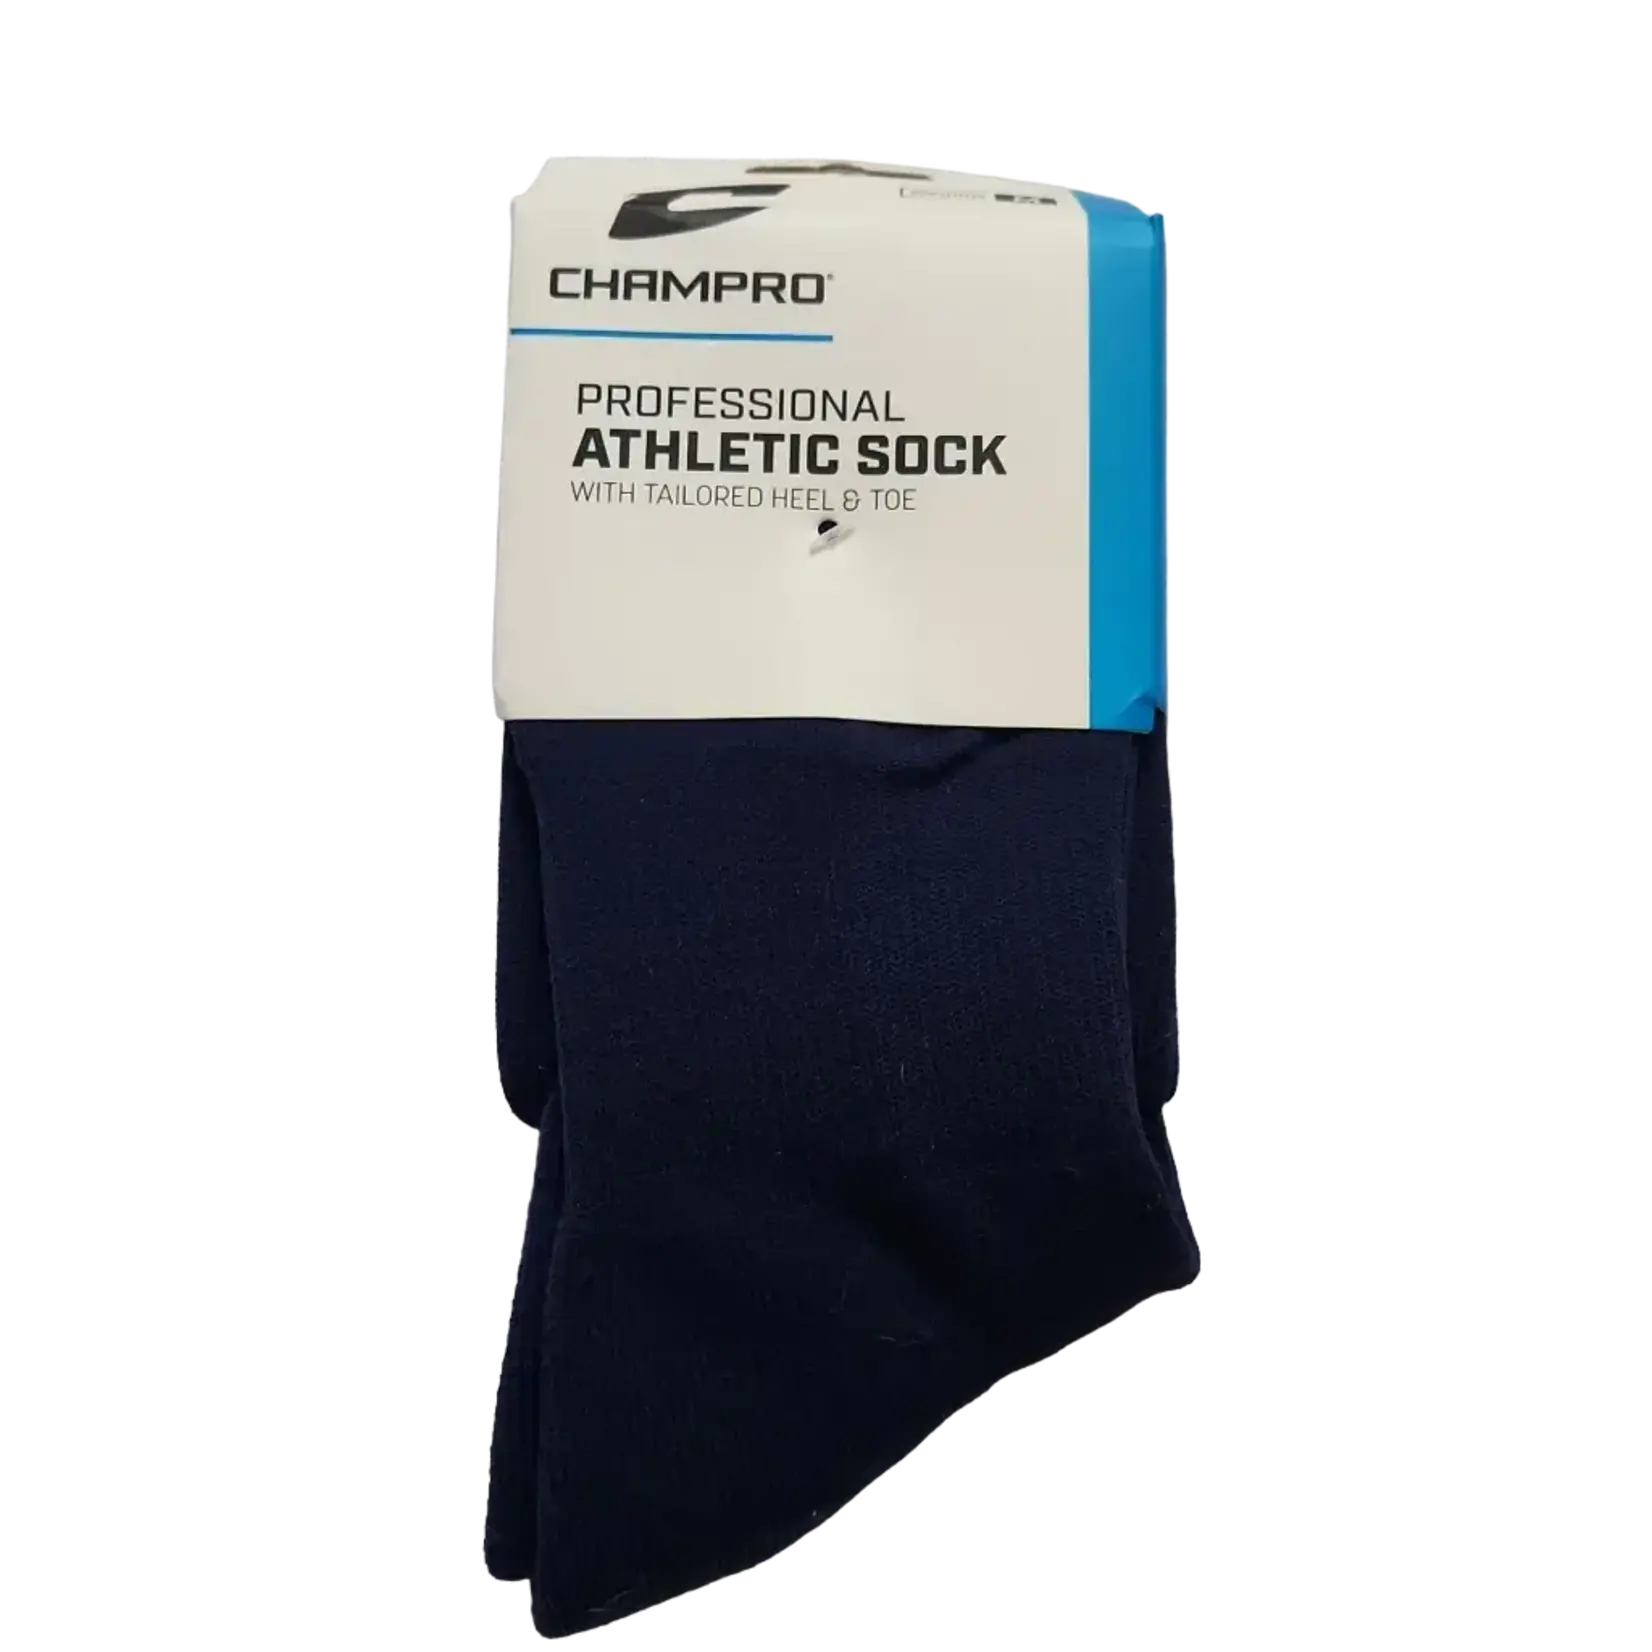 Champro Professional Athletic Sock w/ Tailored Heel & Toe